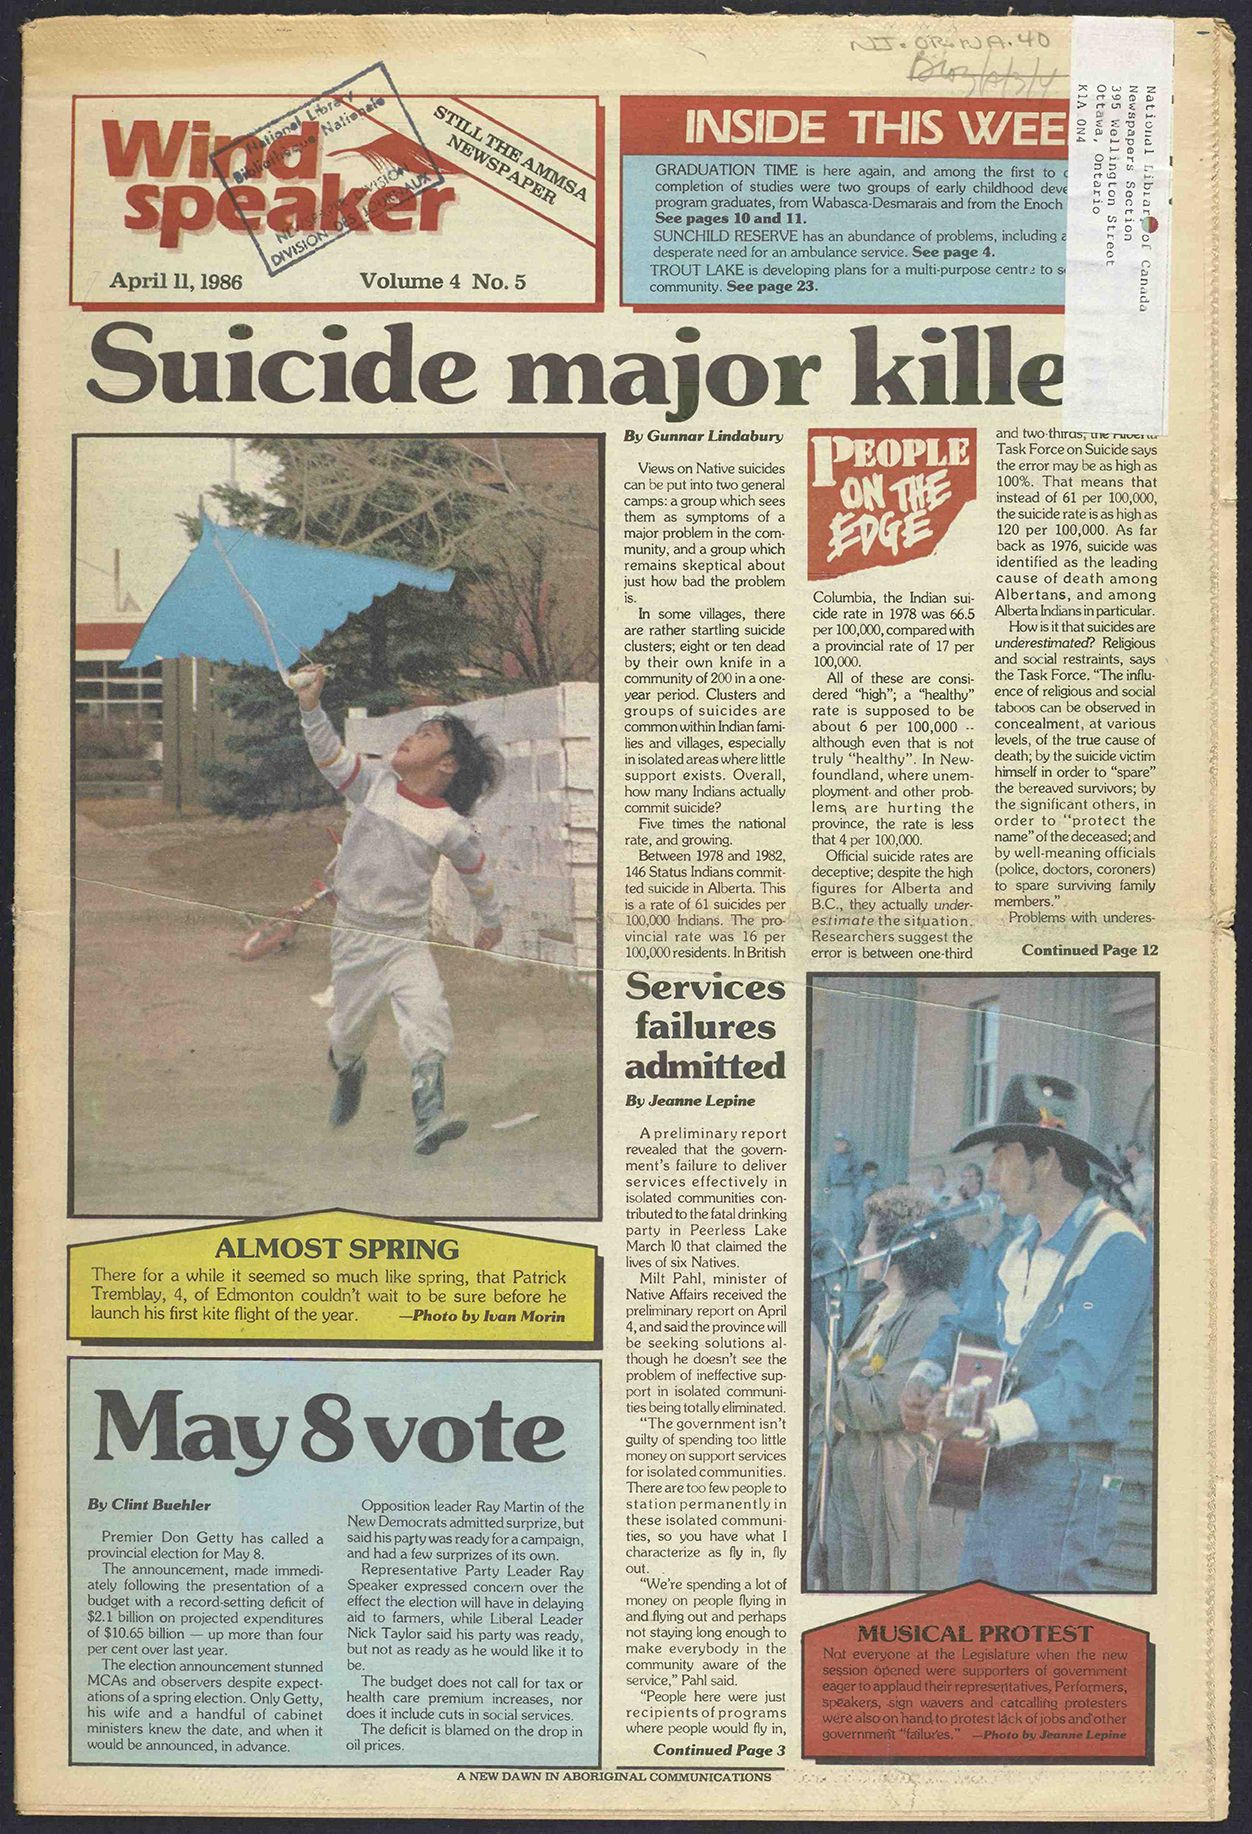 April 11, 1986